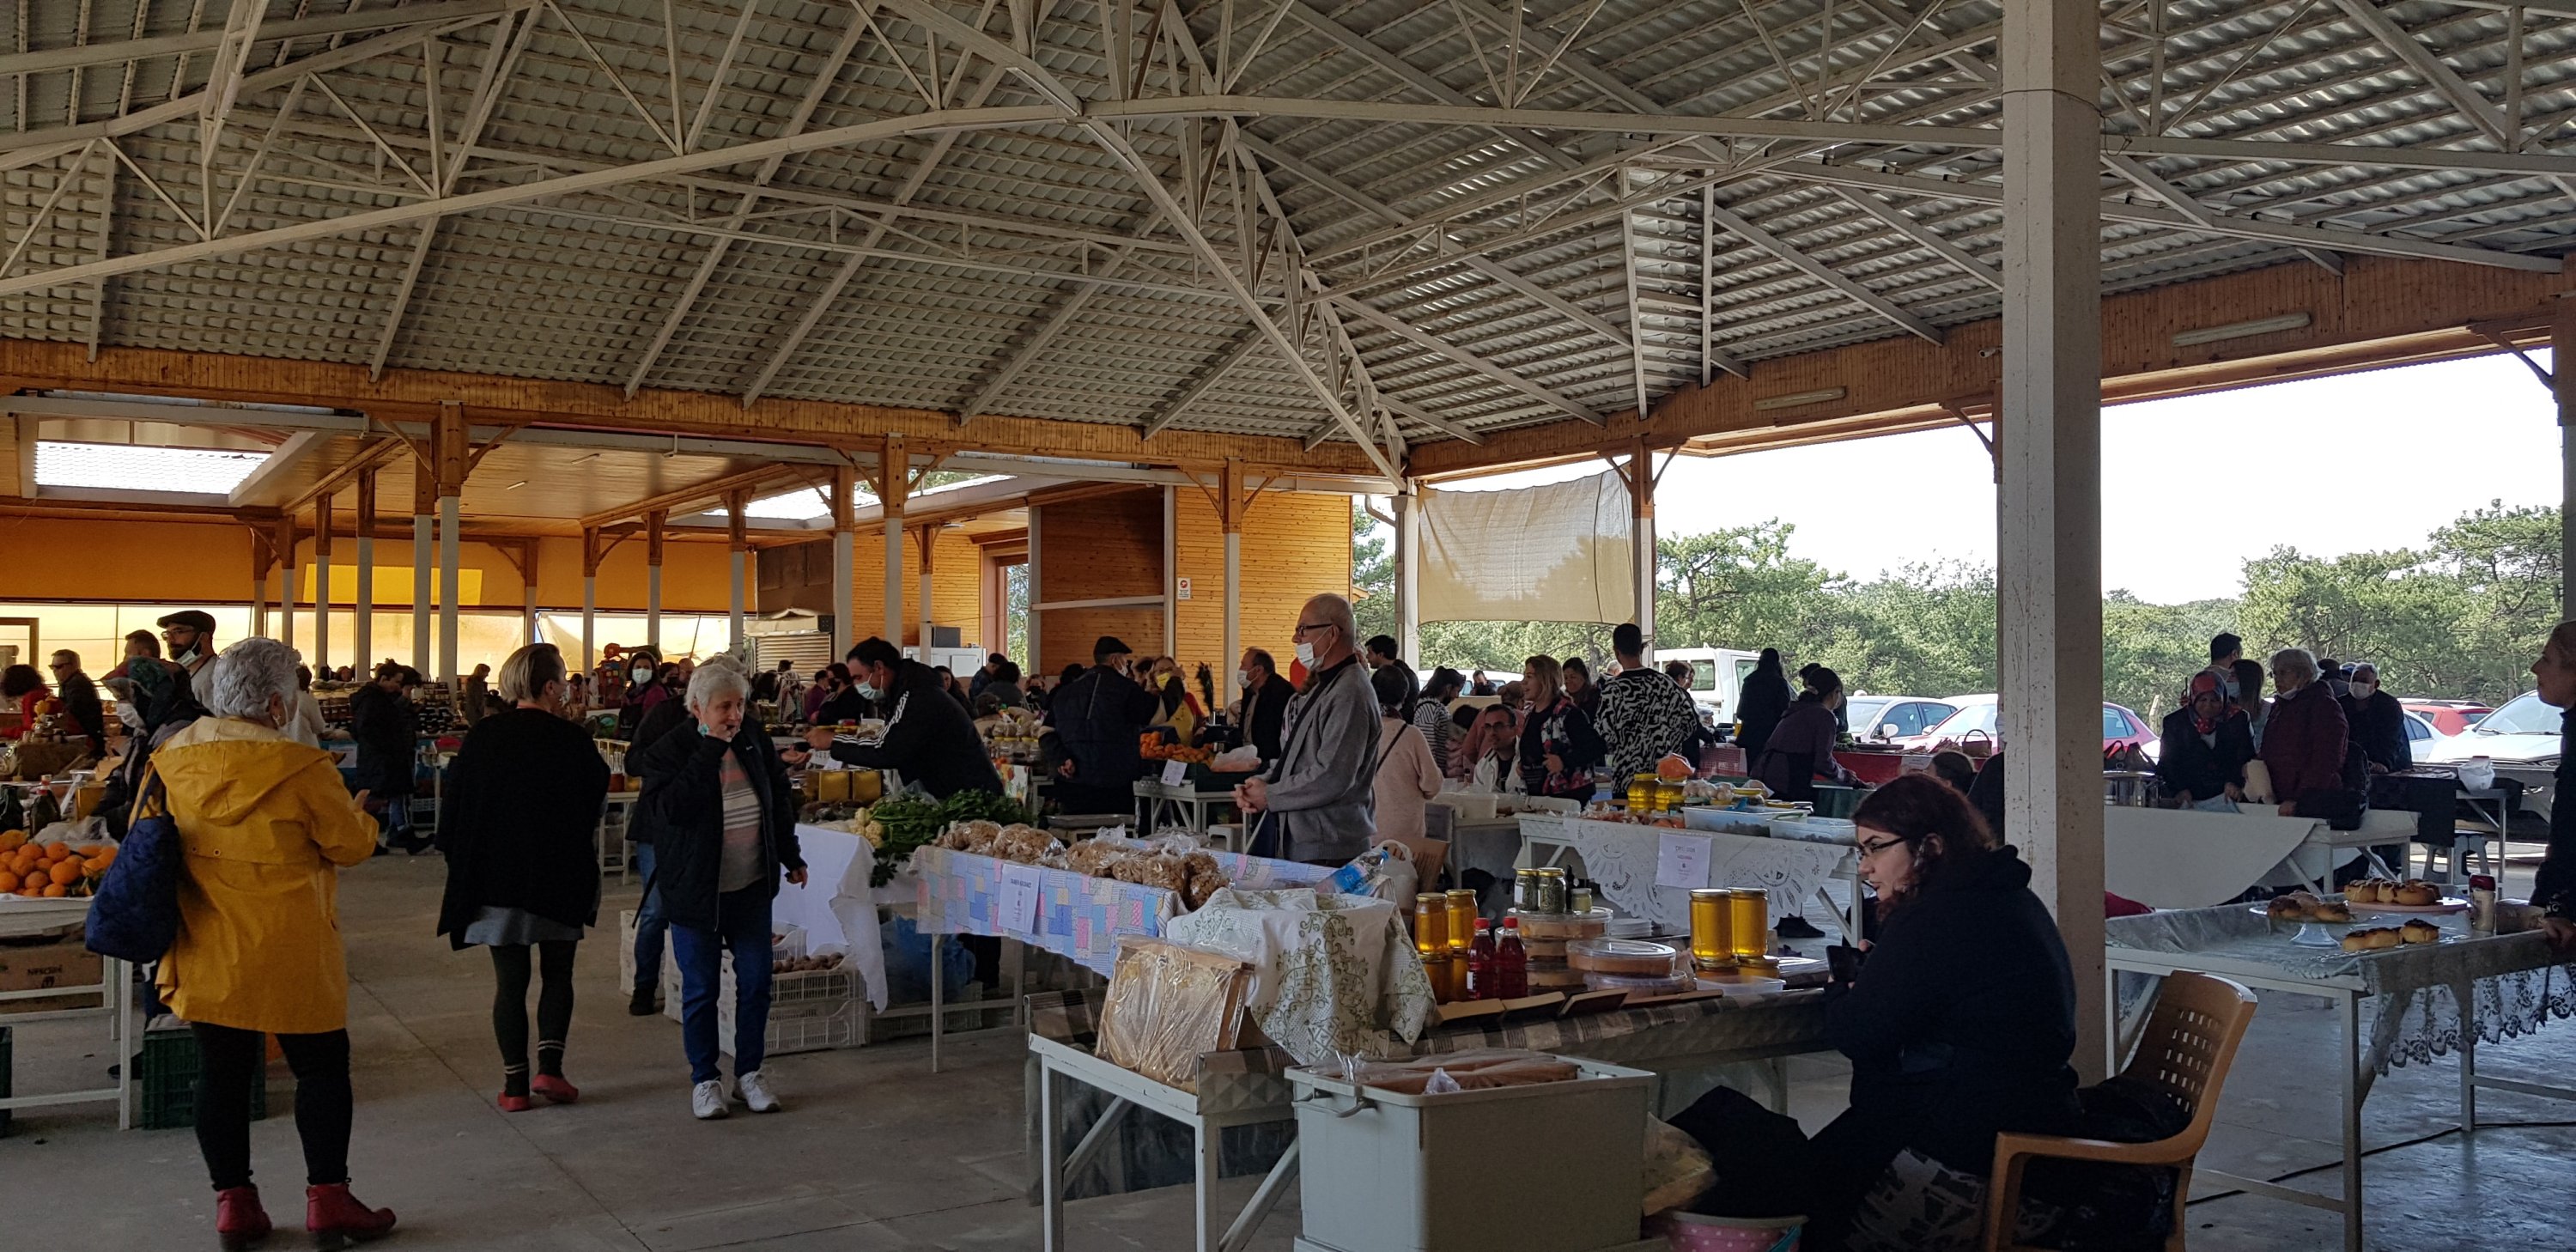 The Gökova Slow Food Community Market provides an enchanting experience, in Gökova, Muğla, southwestern Turkey. (Photo by Leyla Yvonne Ergil)